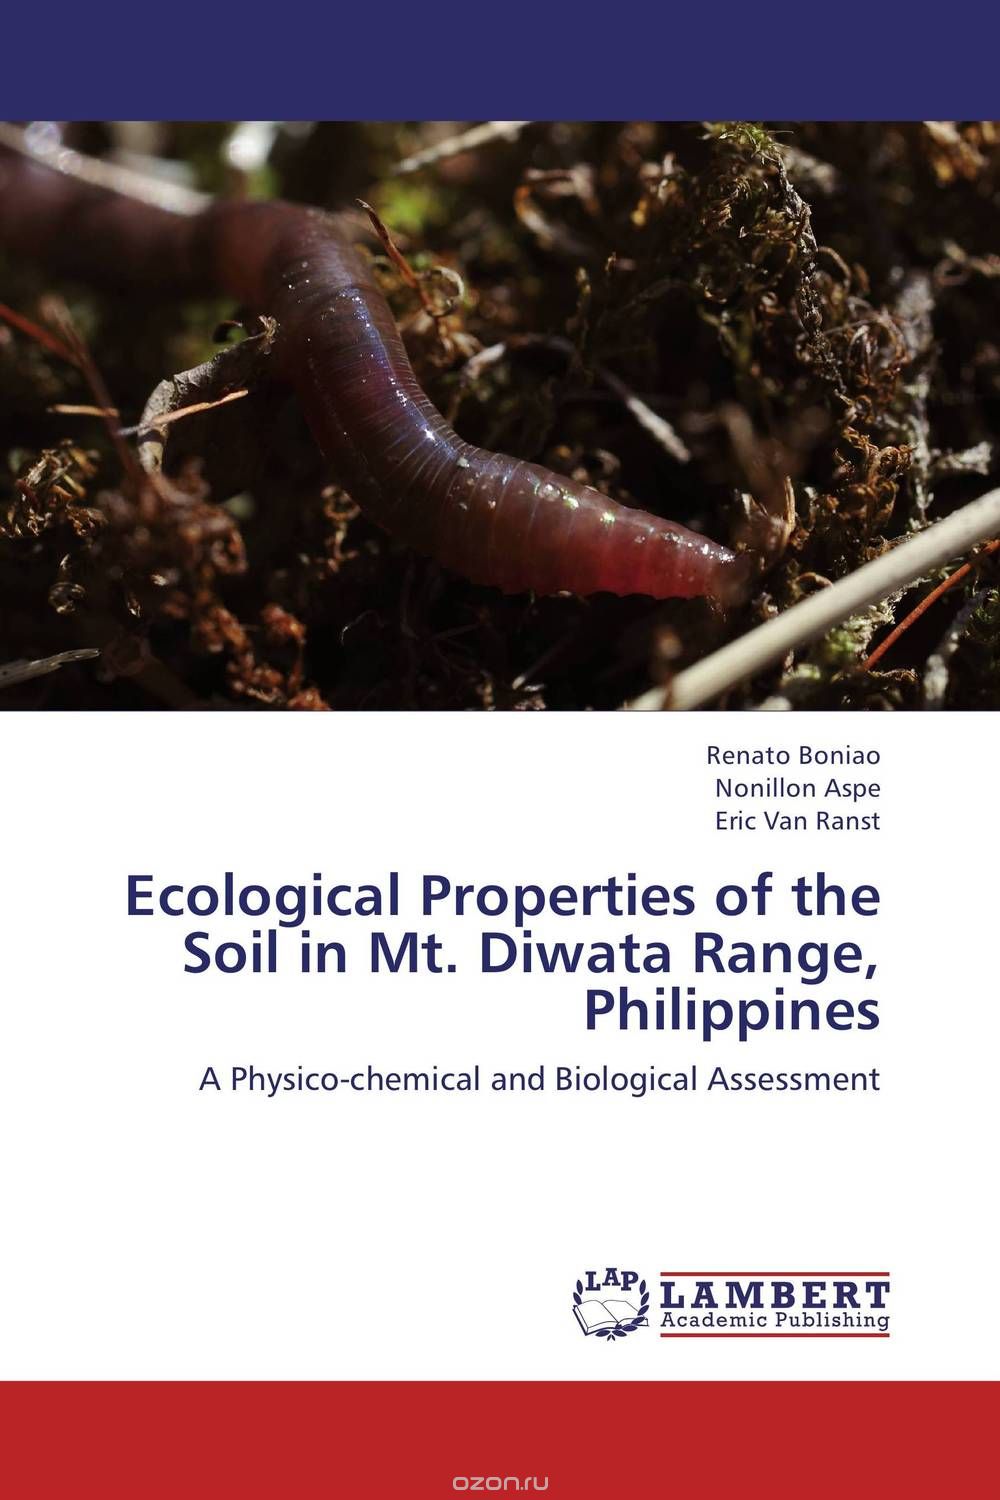 Скачать книгу "Ecological Properties of the Soil in Mt. Diwata Range, Philippines"